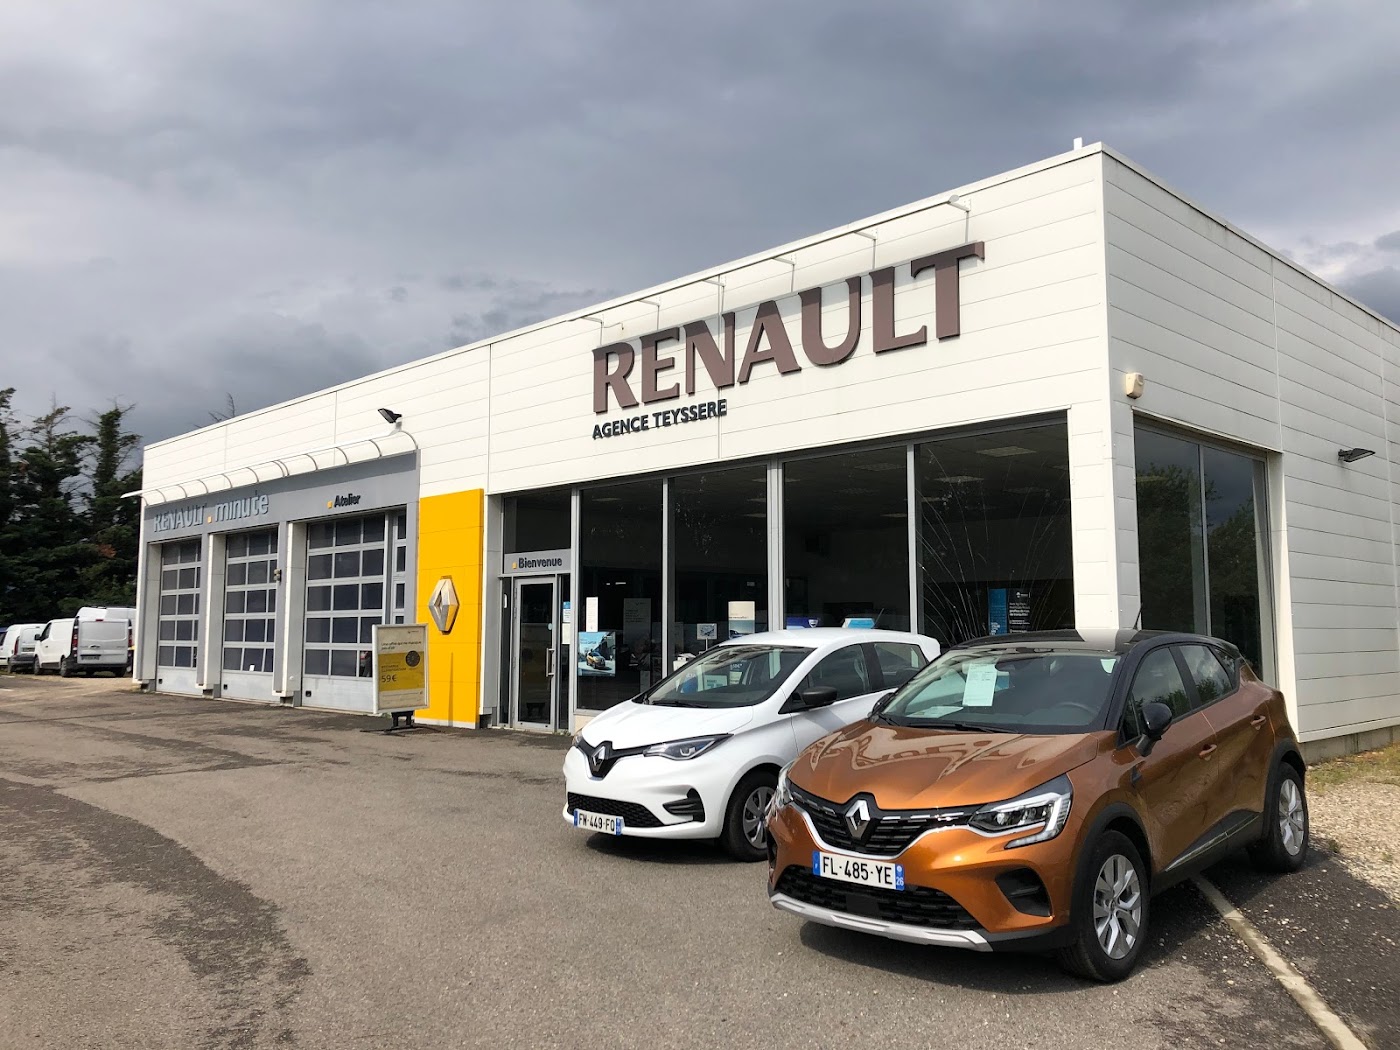 Renault - Agence Teyssere Frères